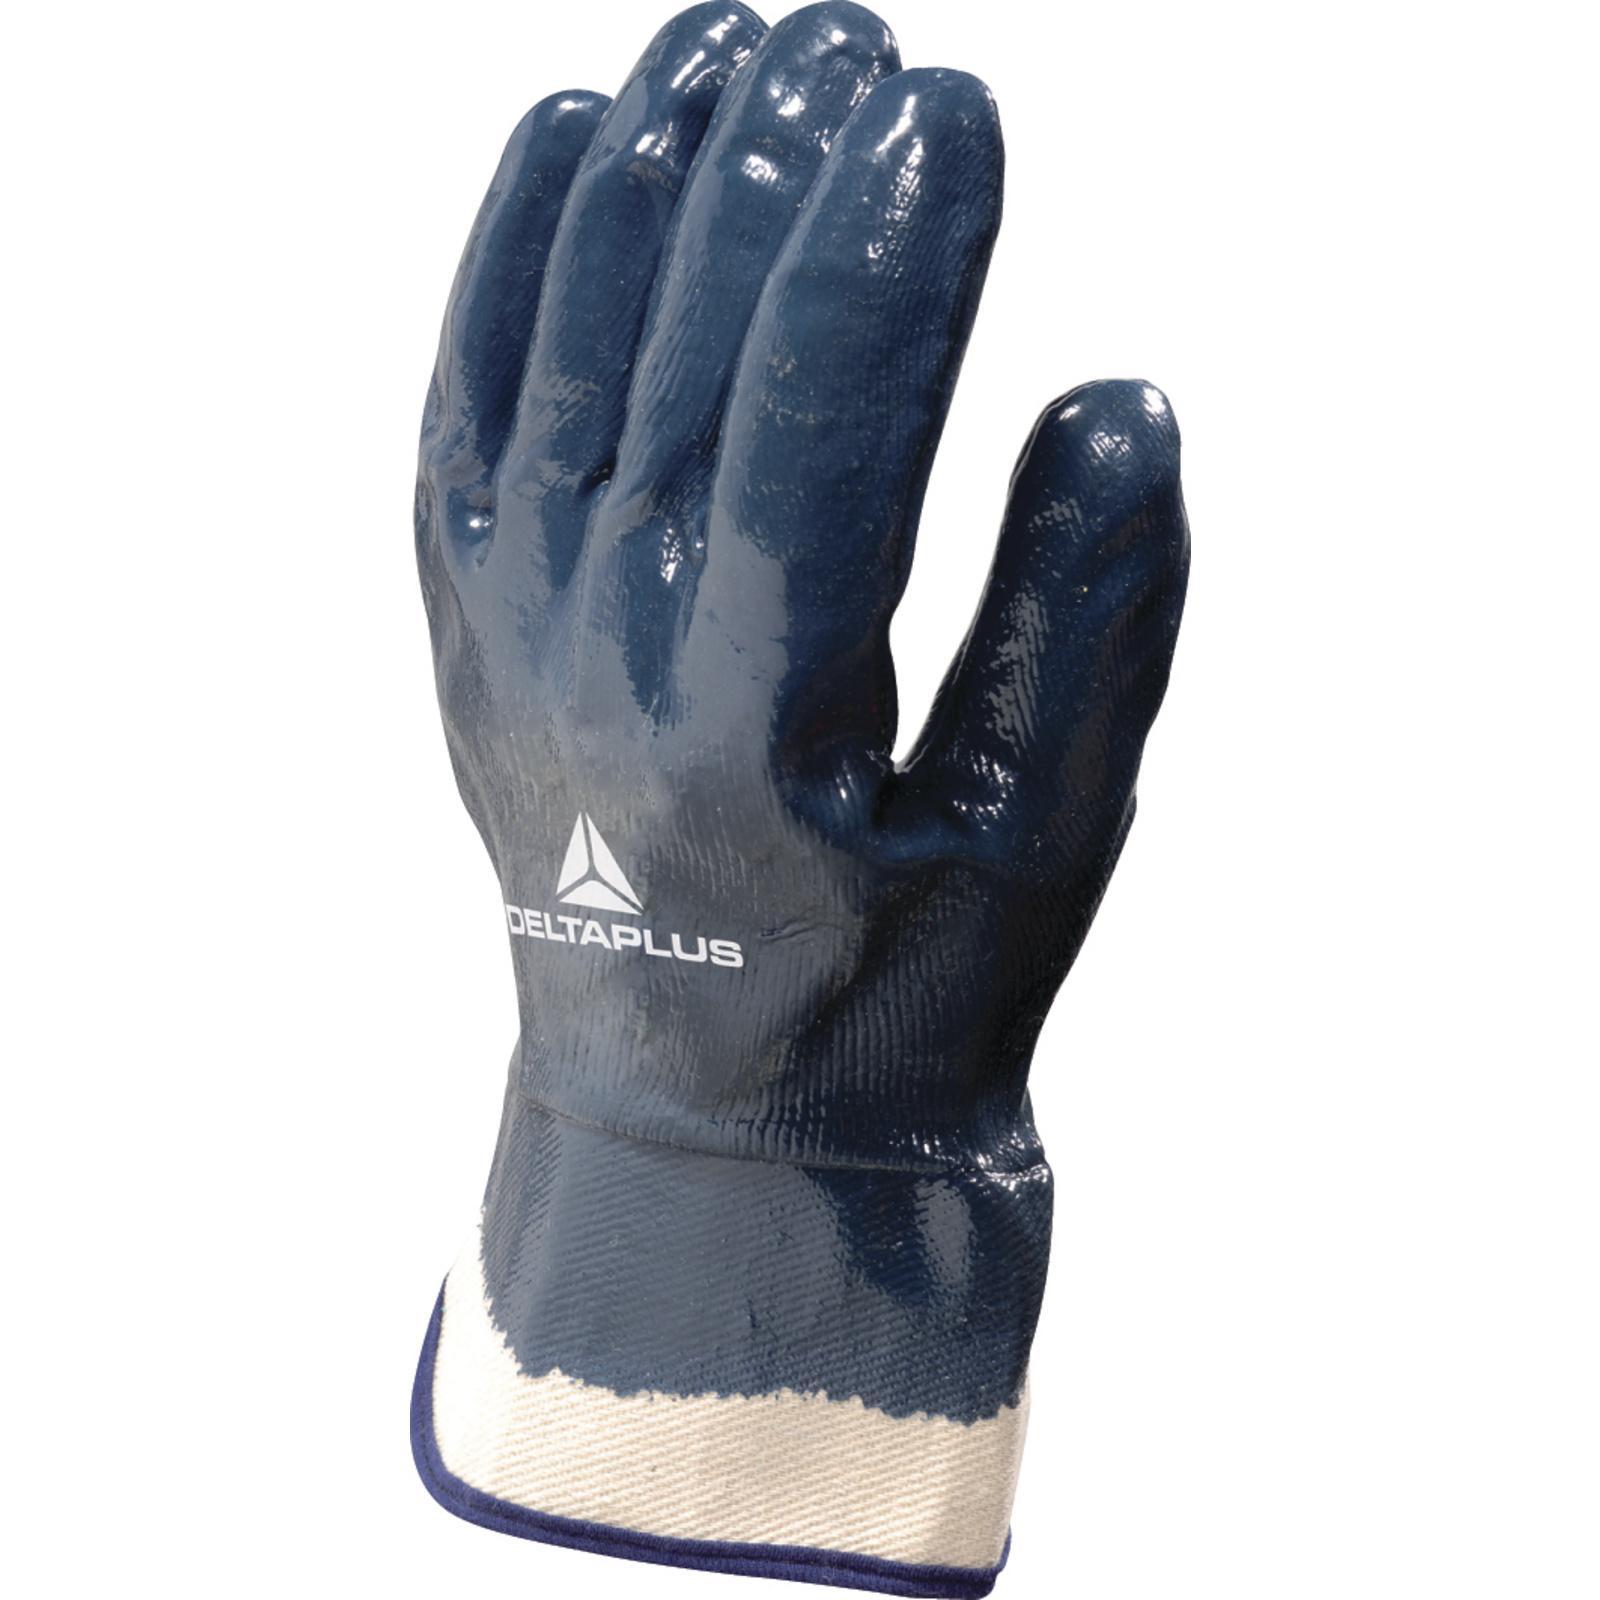 Delta Plus Venitex NI170 Heavy Duty Blue Nitrile Work Gloves Size 10 X-Large 